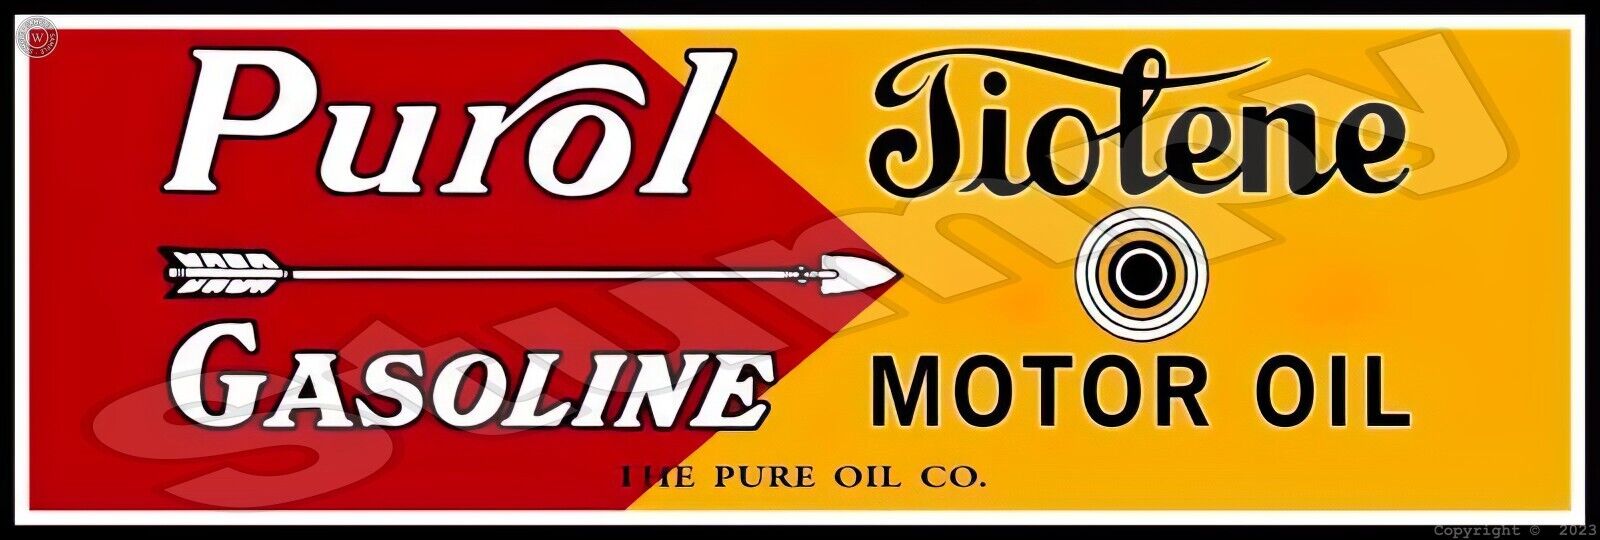 Purol Gasoline Tiolene Motor O  Metal Sign 6